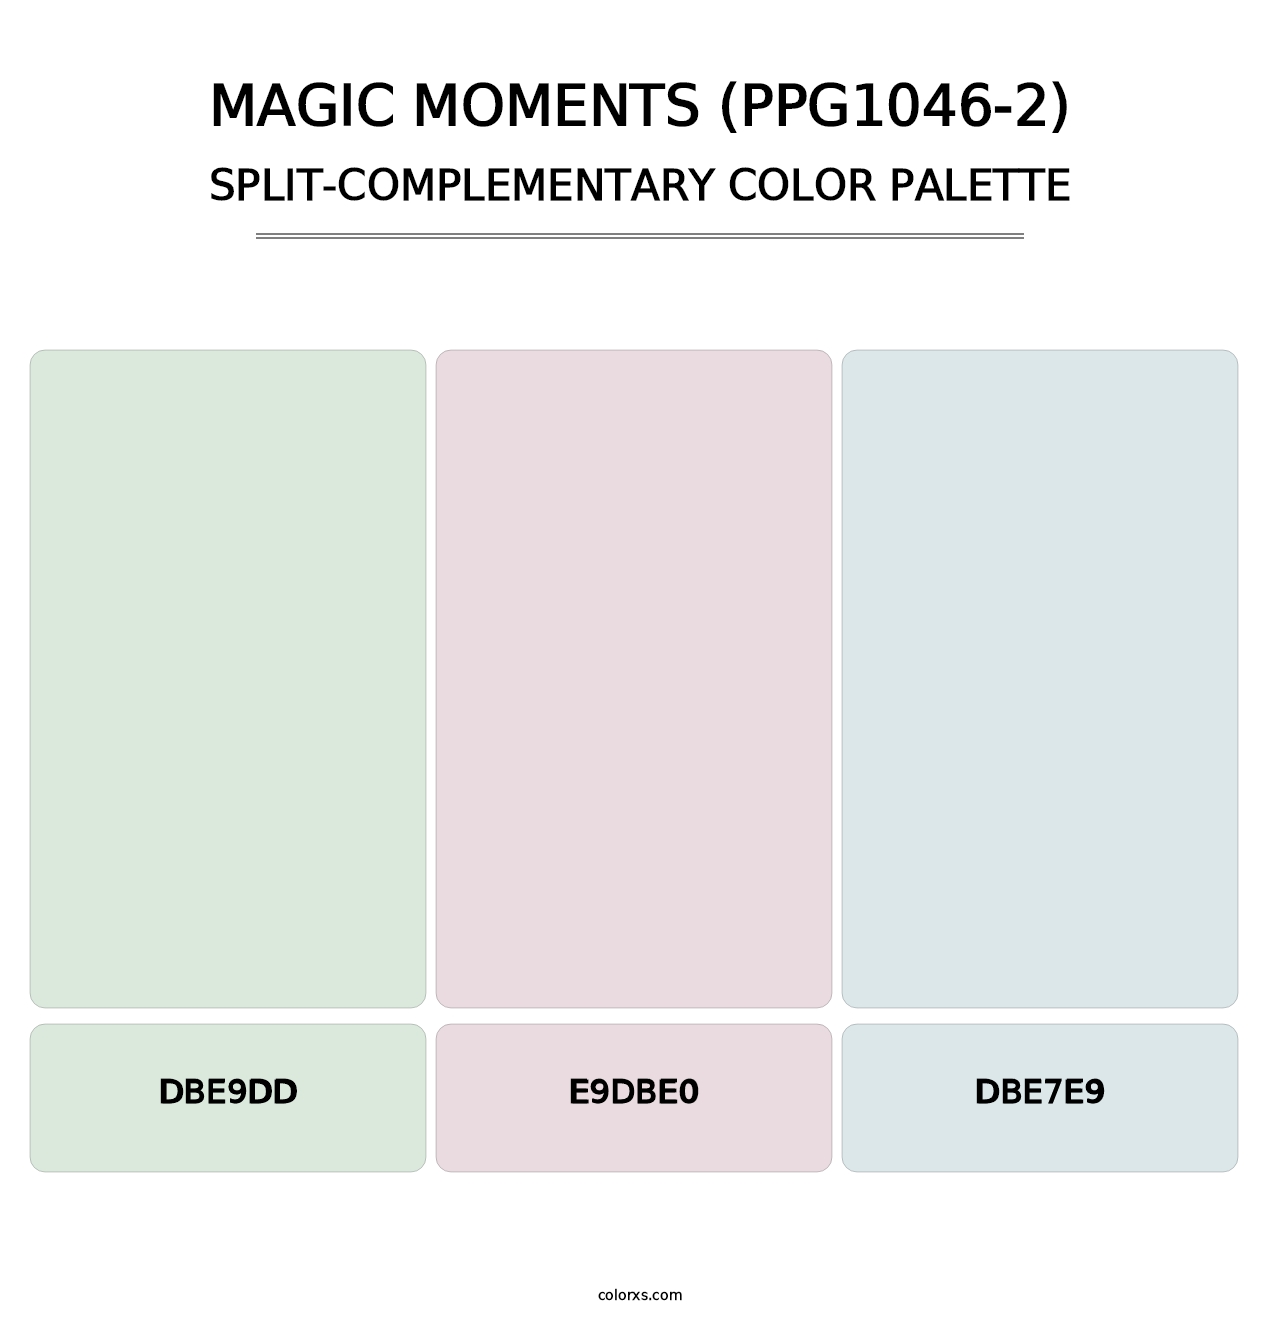 Magic Moments (PPG1046-2) - Split-Complementary Color Palette